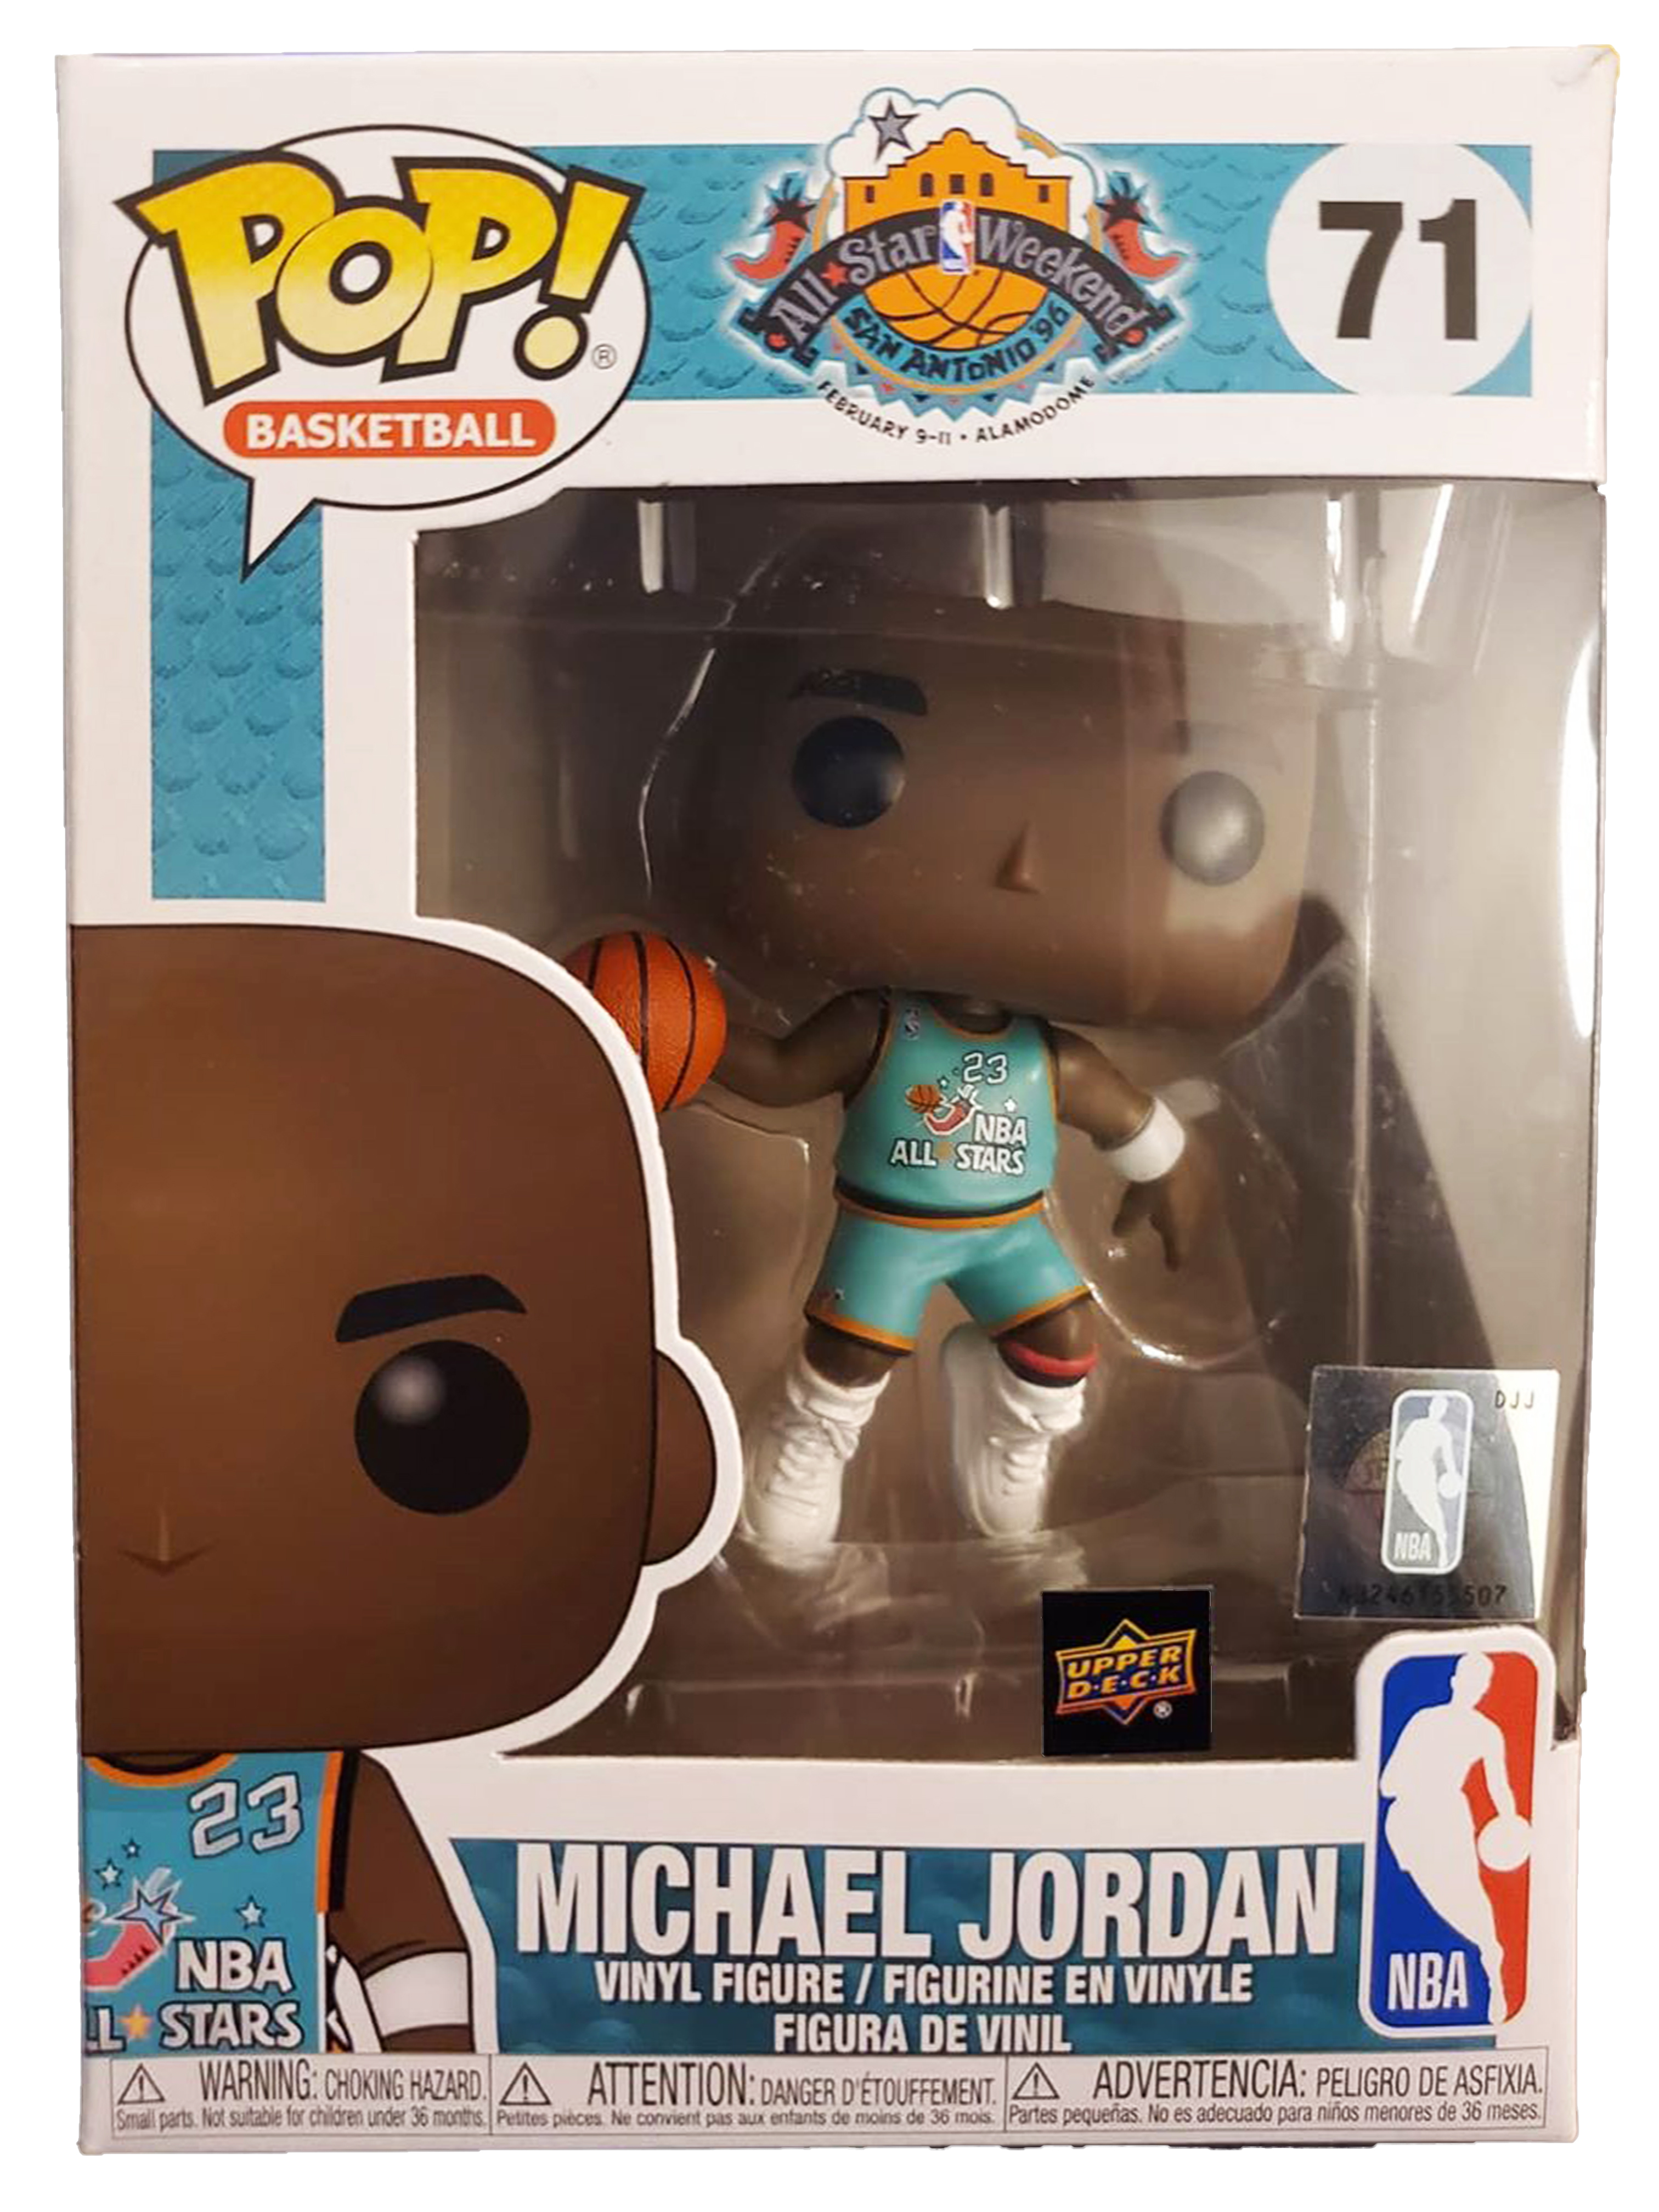 Funko Pop! Basketball Michael Jordan 